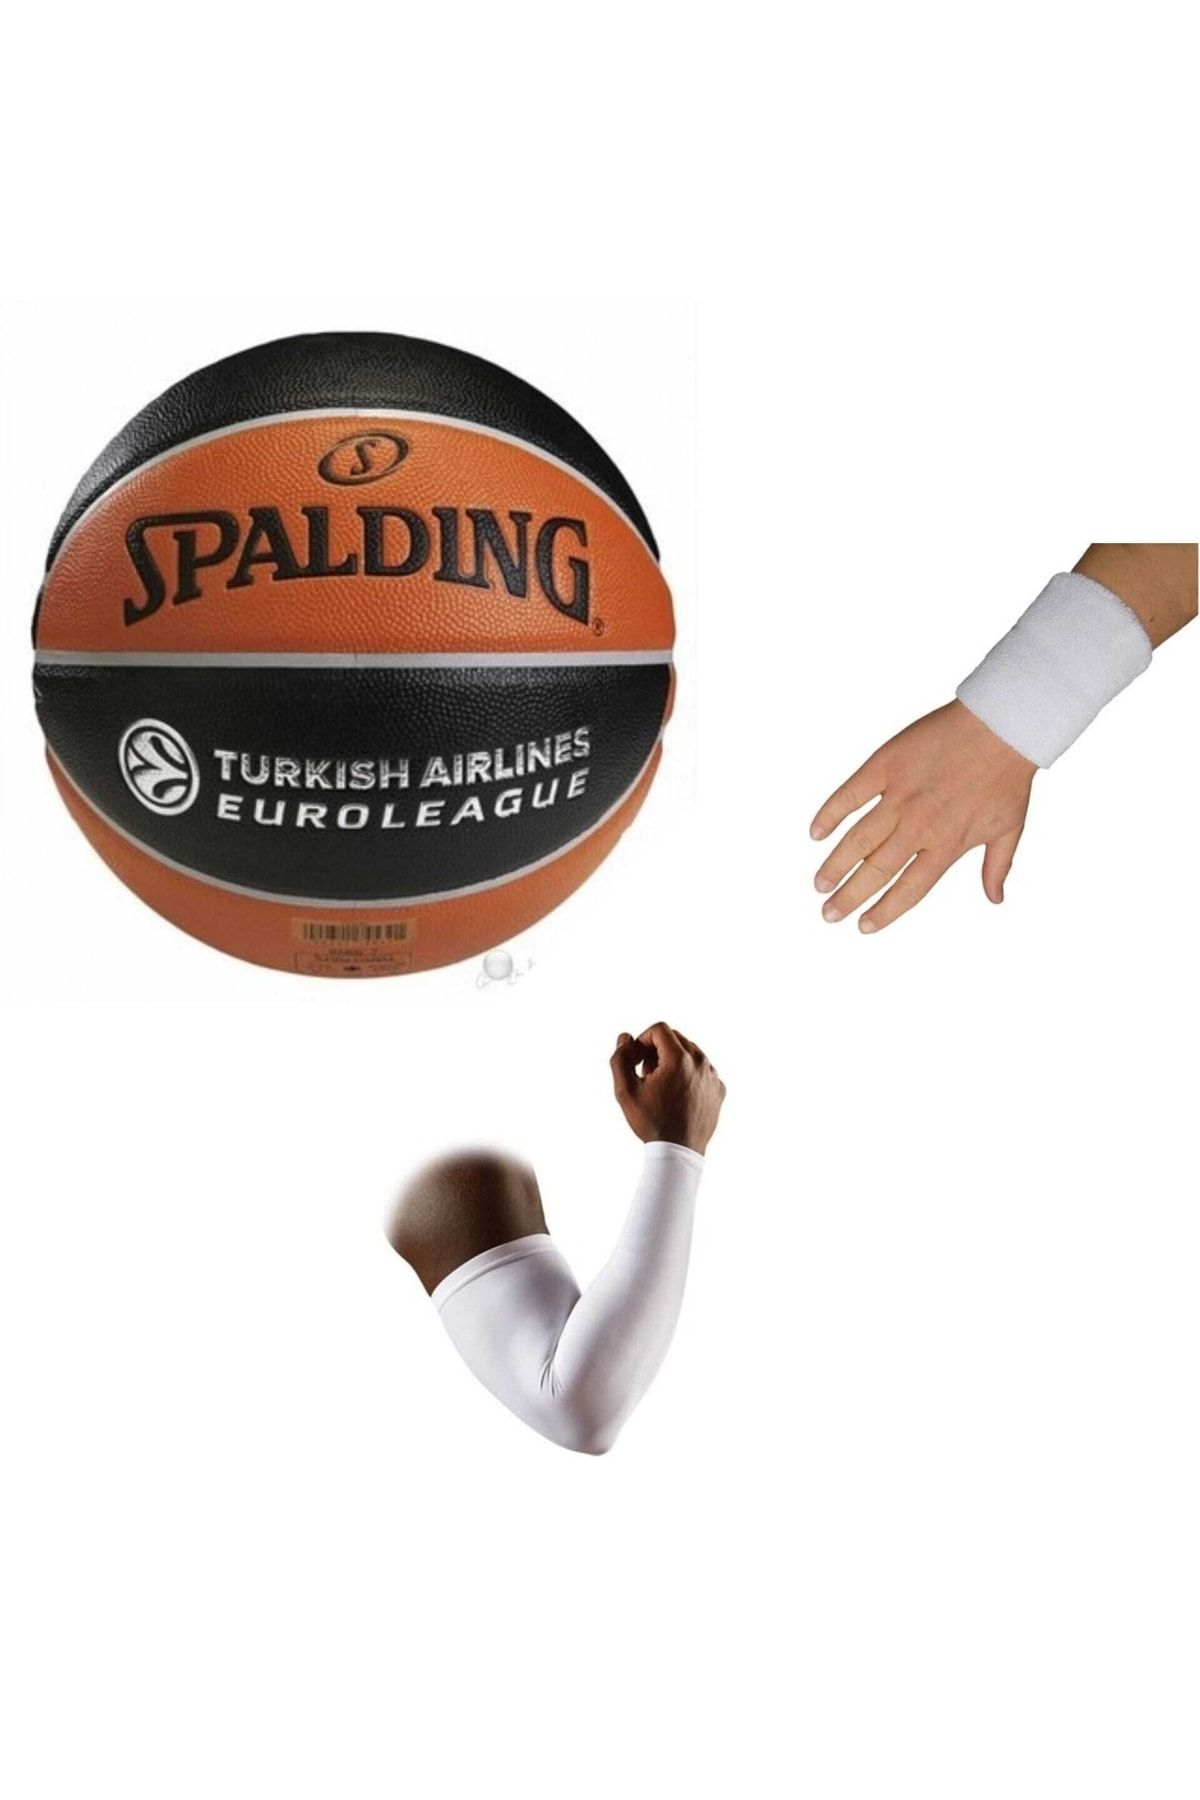 Spalding Basketbol Topu Tf150 7 Euroleague Tf150 5 Numara +basketbol Kolluğu+havlu Bıleklık